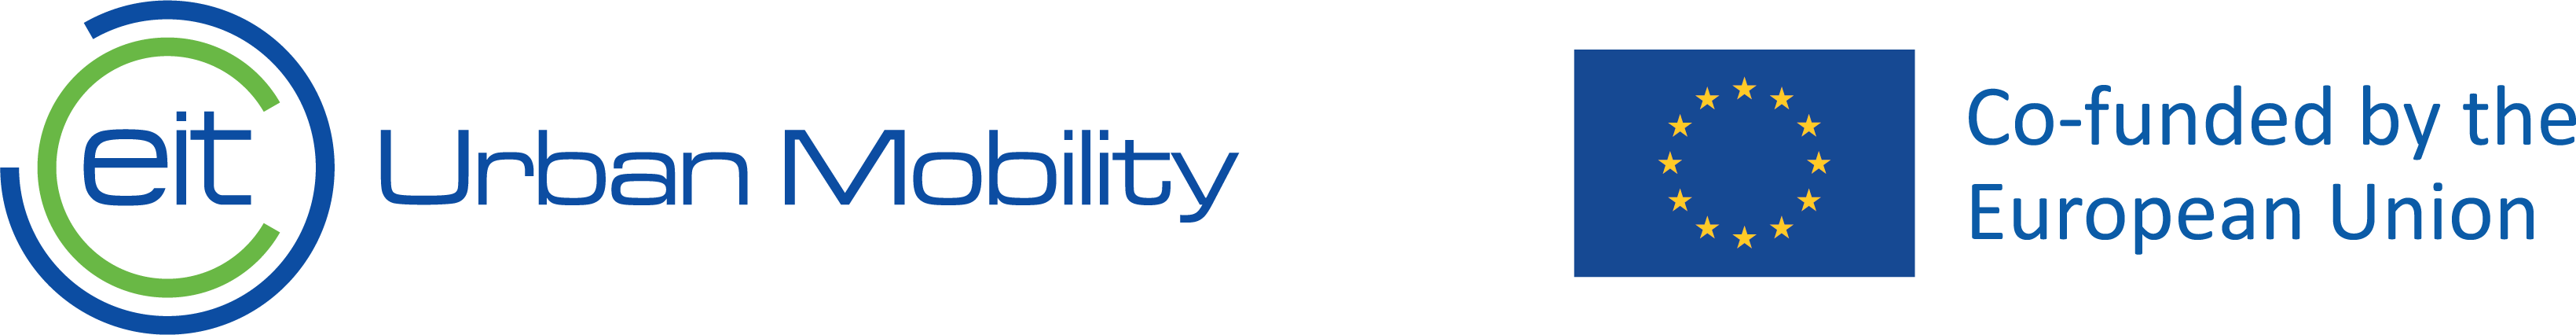 ratioX_eit Urban Mobility logo